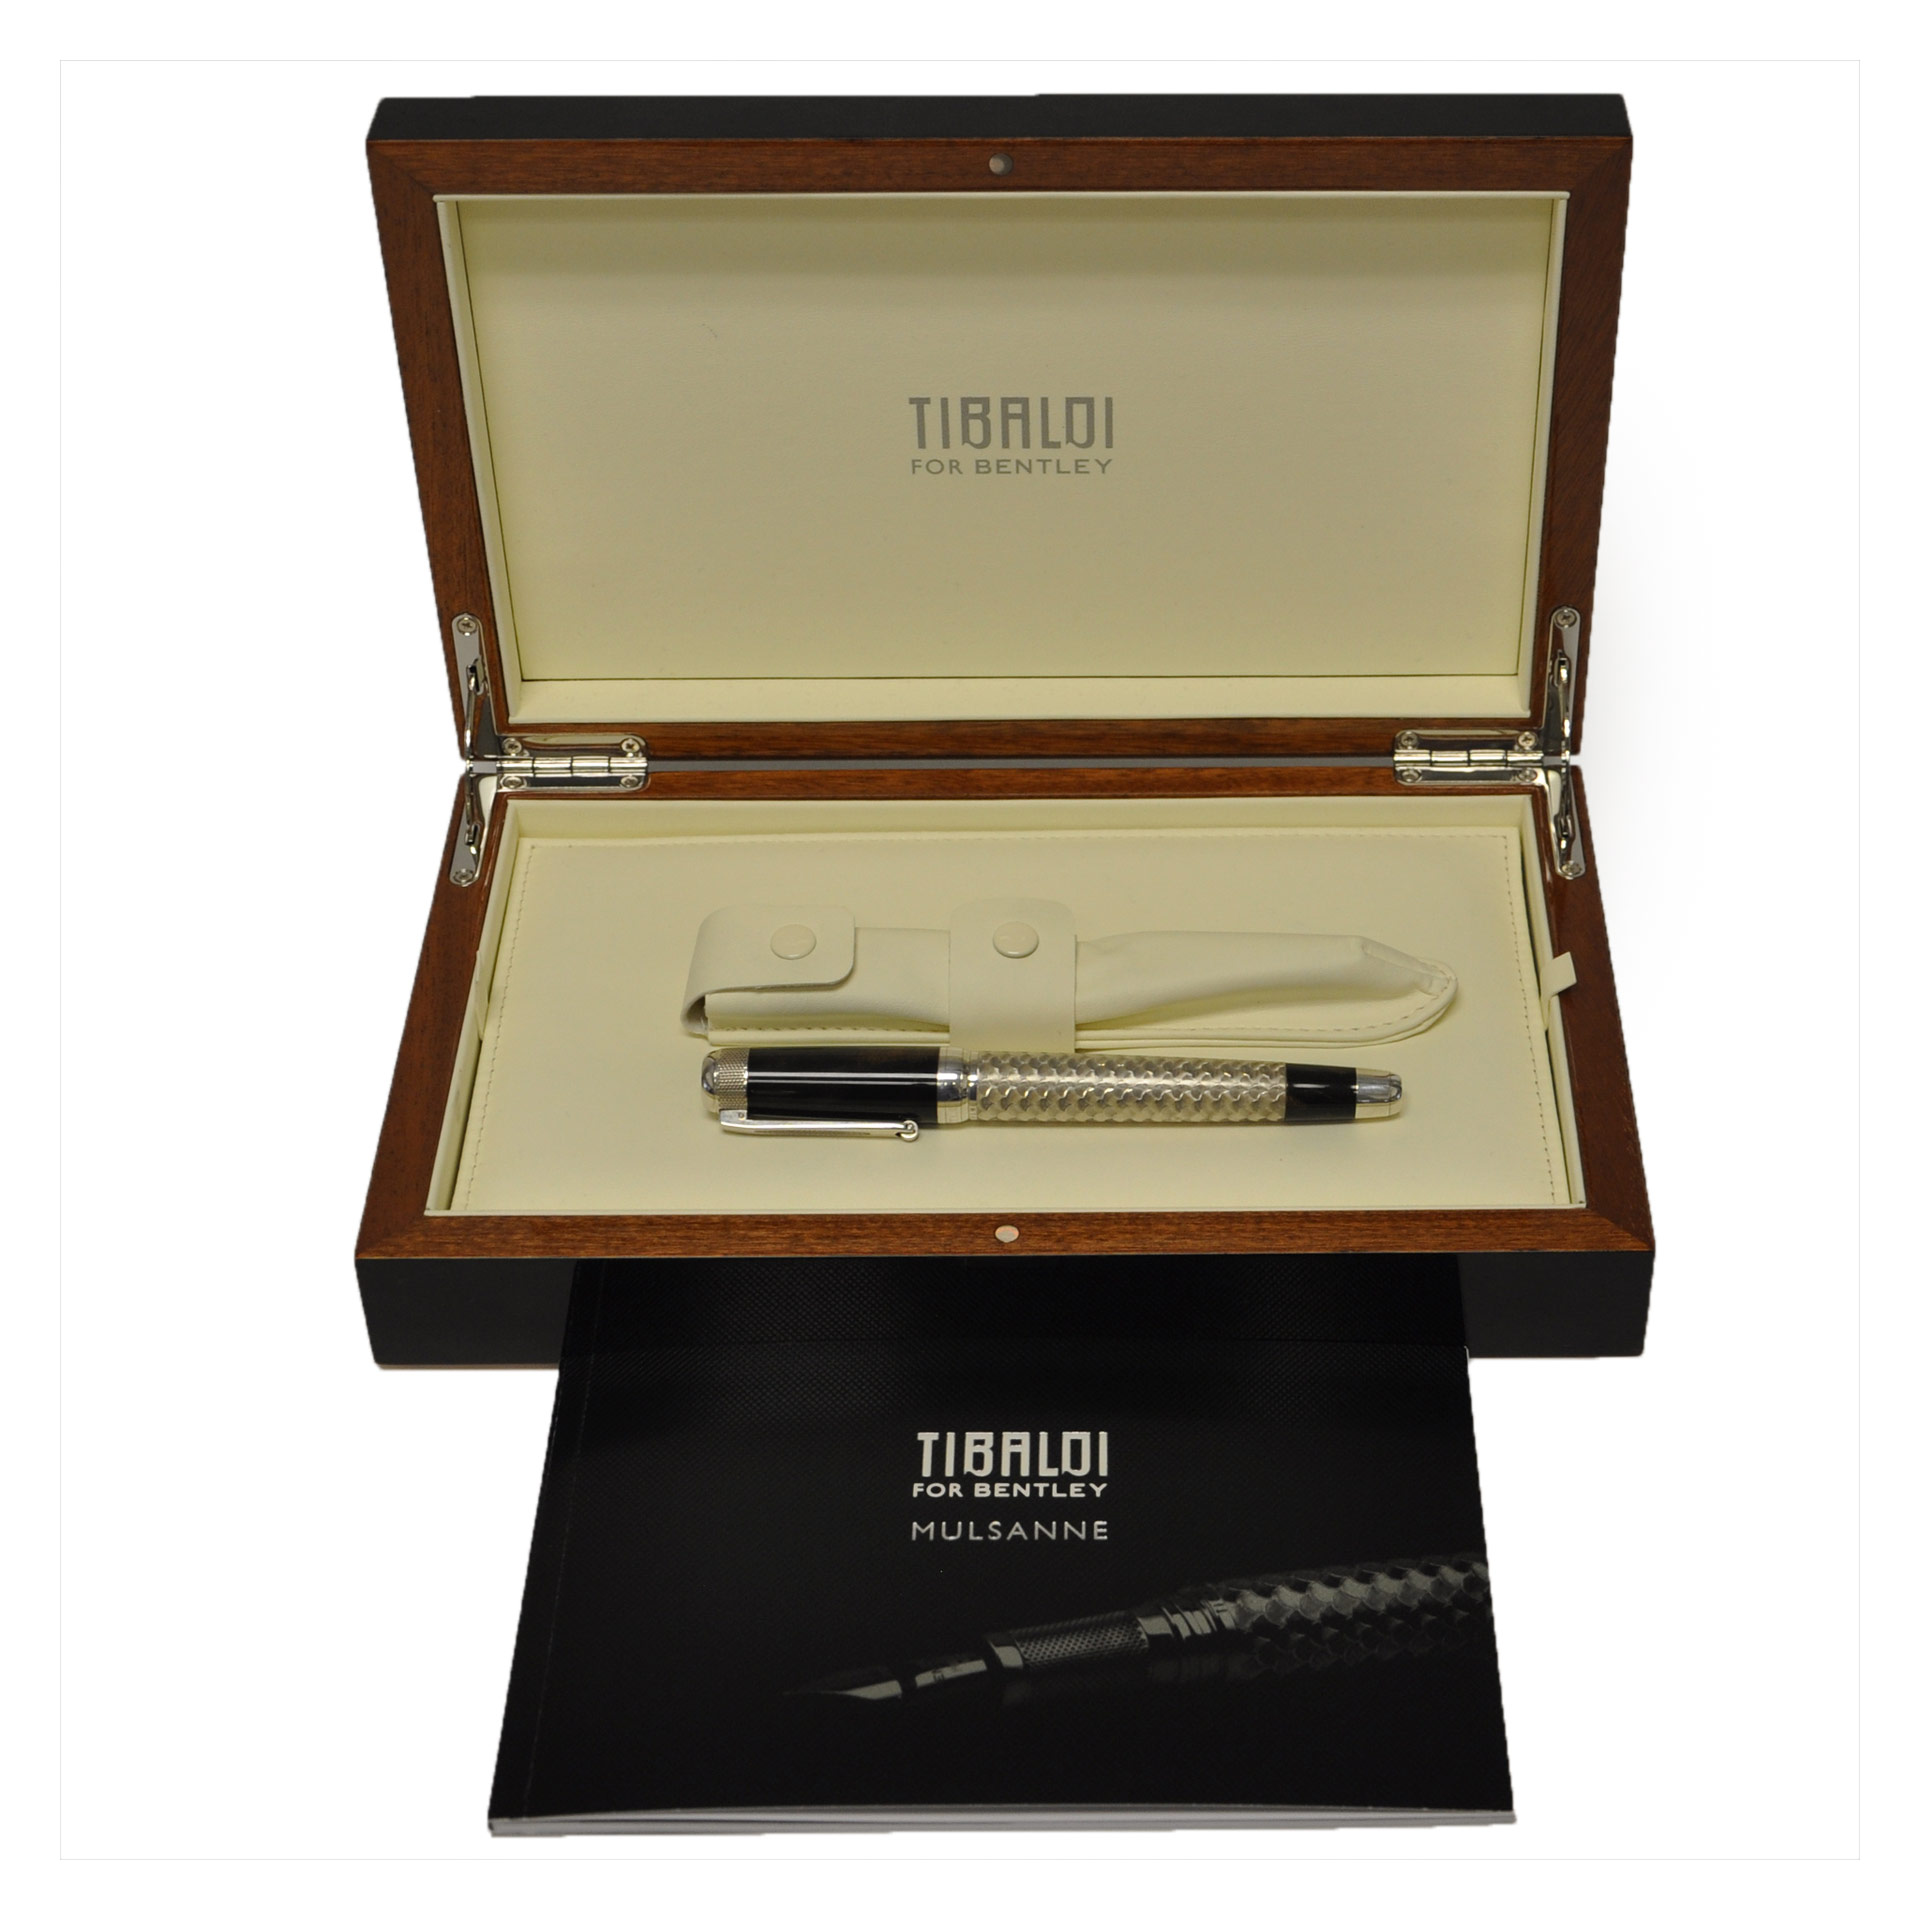 Limited edition Tibaldi for Bentley Mulsanne fountain pen with 18k nib 21/90.